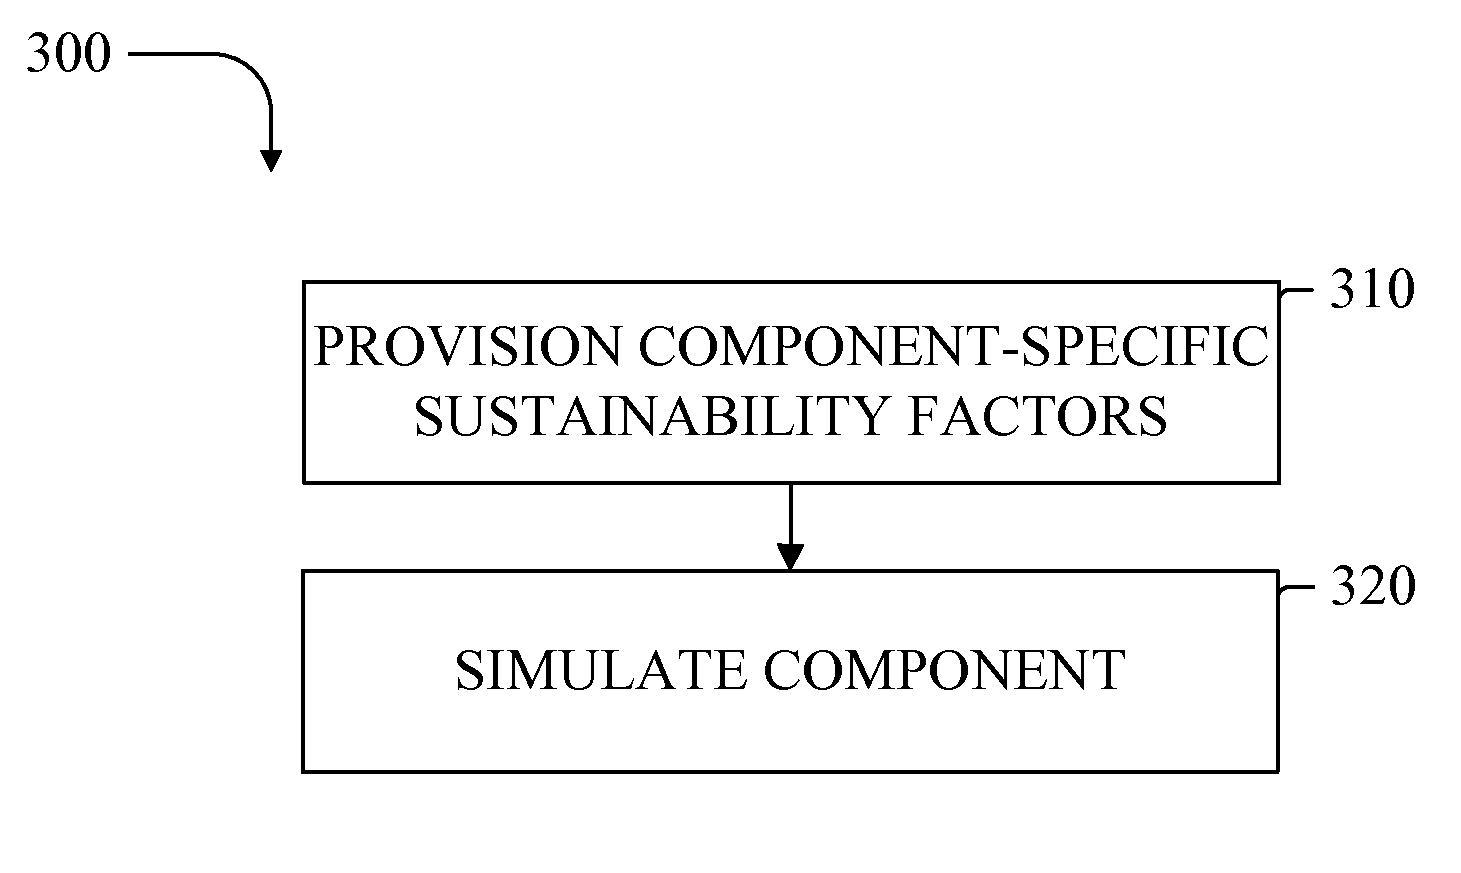 Process simulation utilizing component-specific consumption data